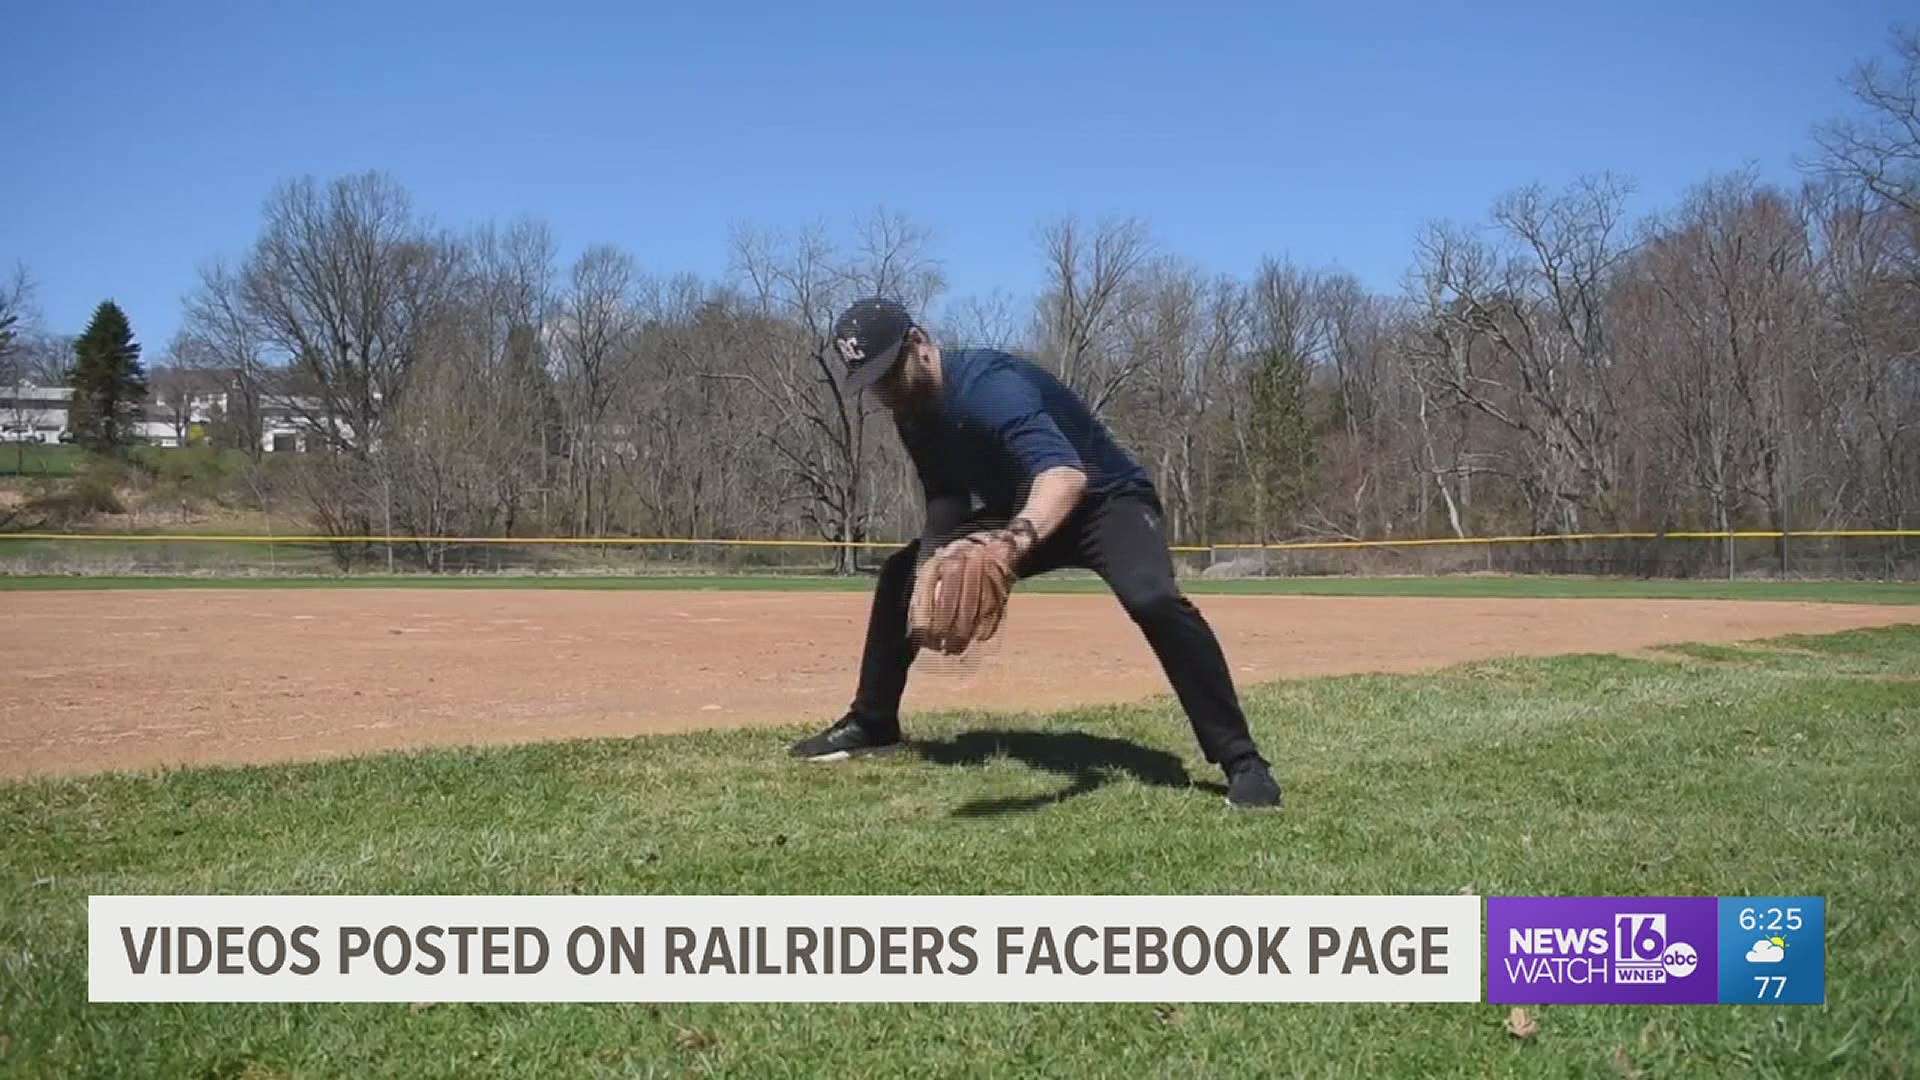 RailRiders University gives baseball tutorials online.